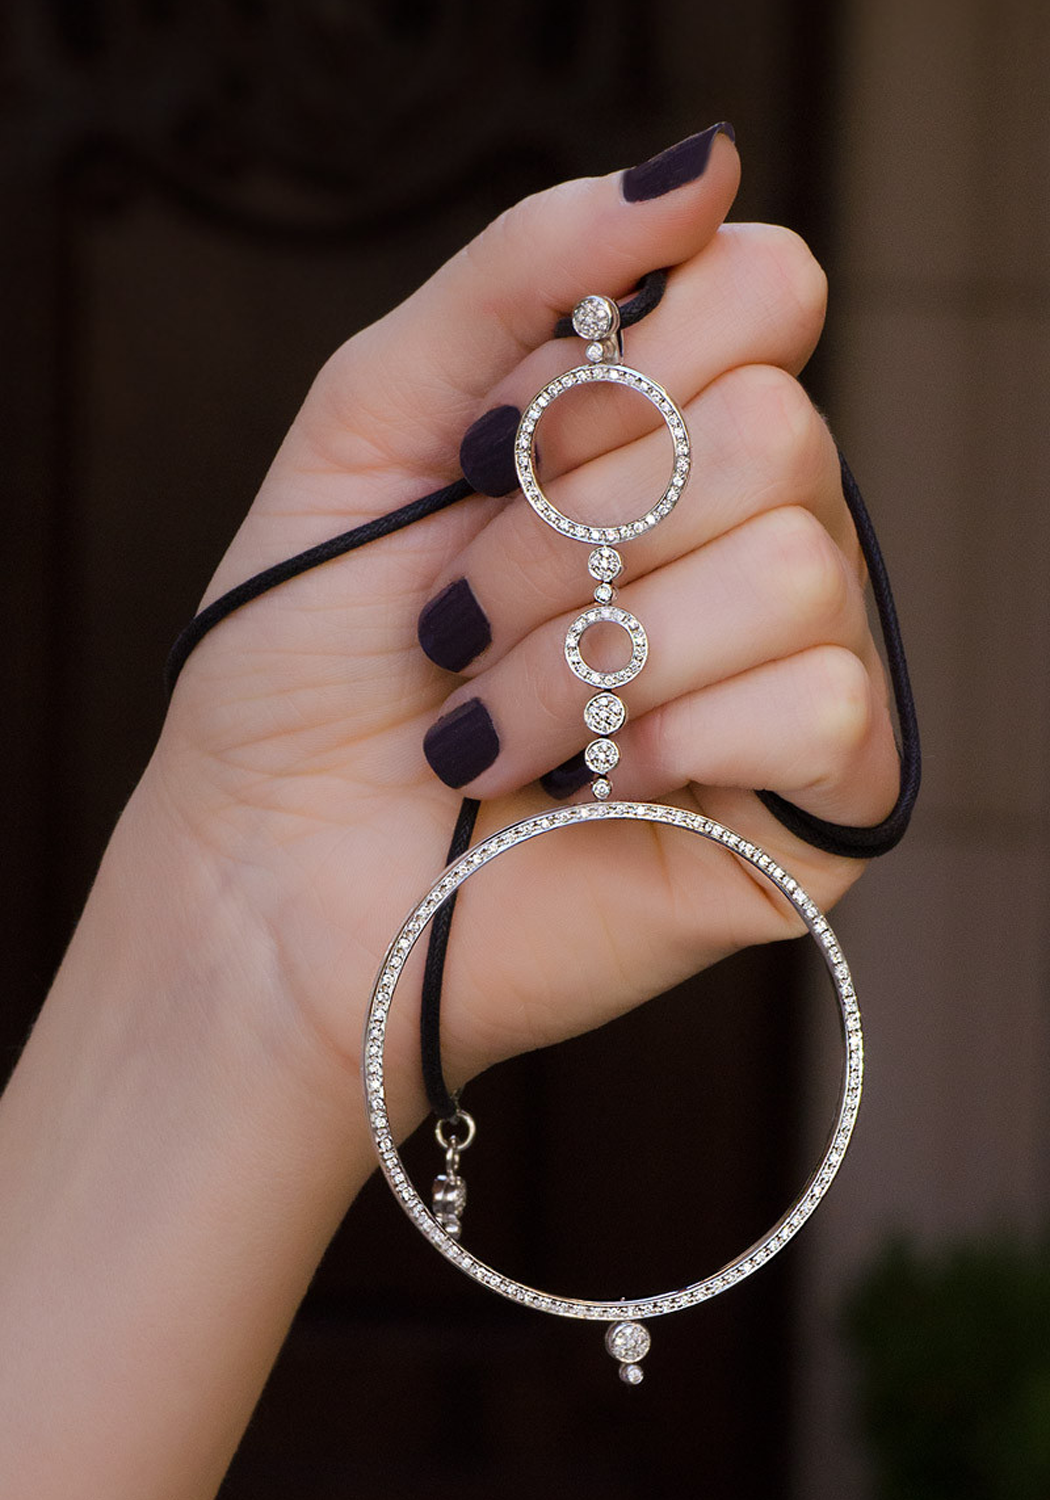 Antonini Alaska 18K White Gold Diamond Circle Pendant Necklace | OsterJewelers.com